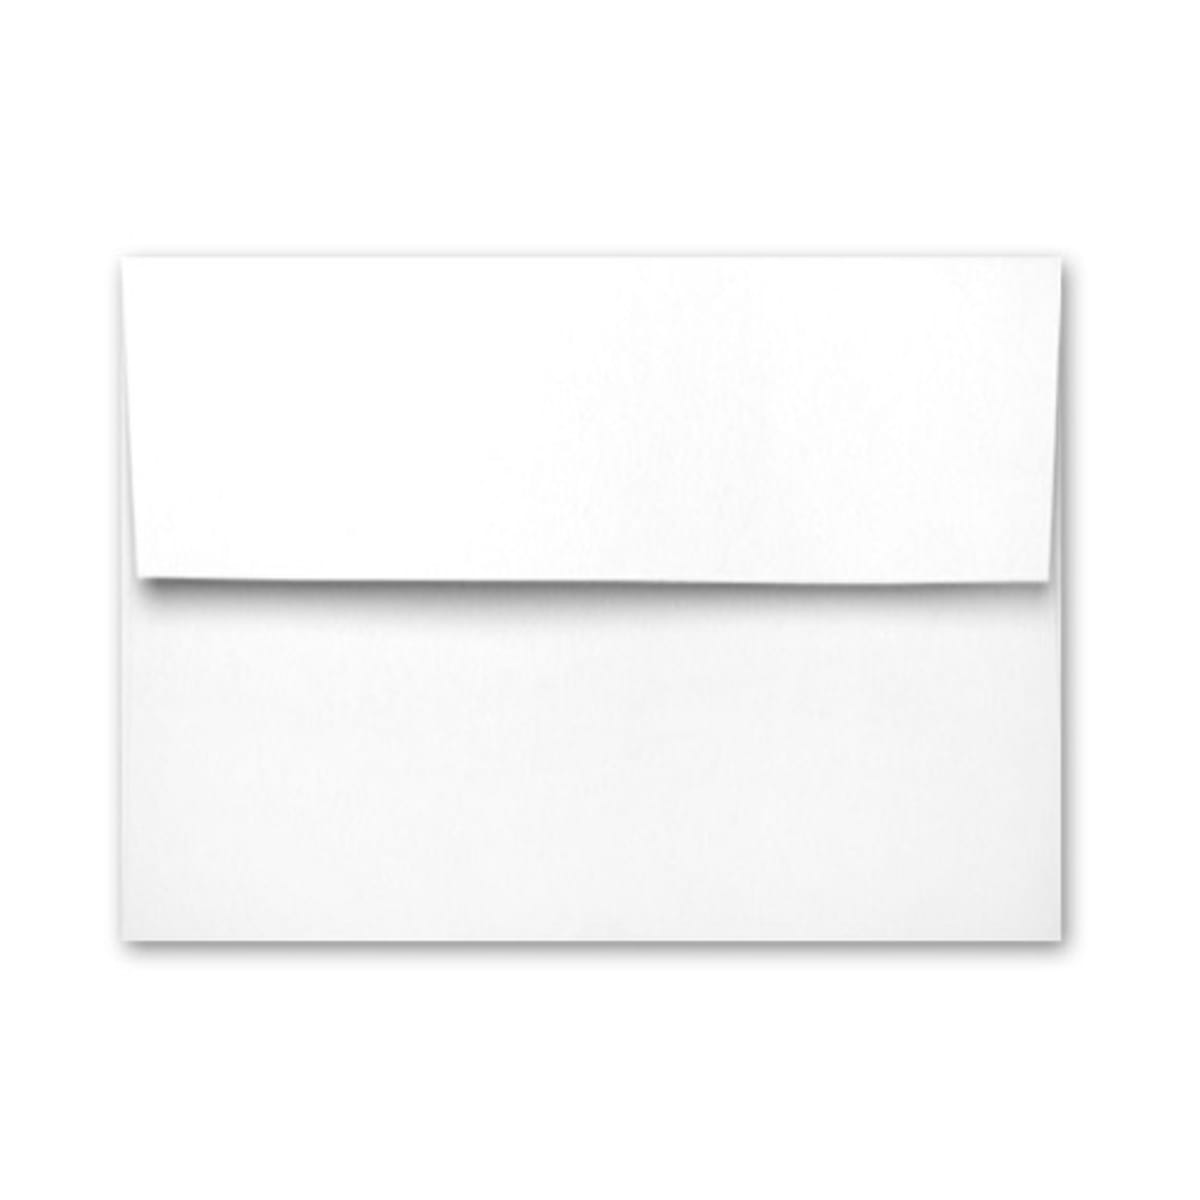 A4 Paper Size White Envelope - 50 Pieces